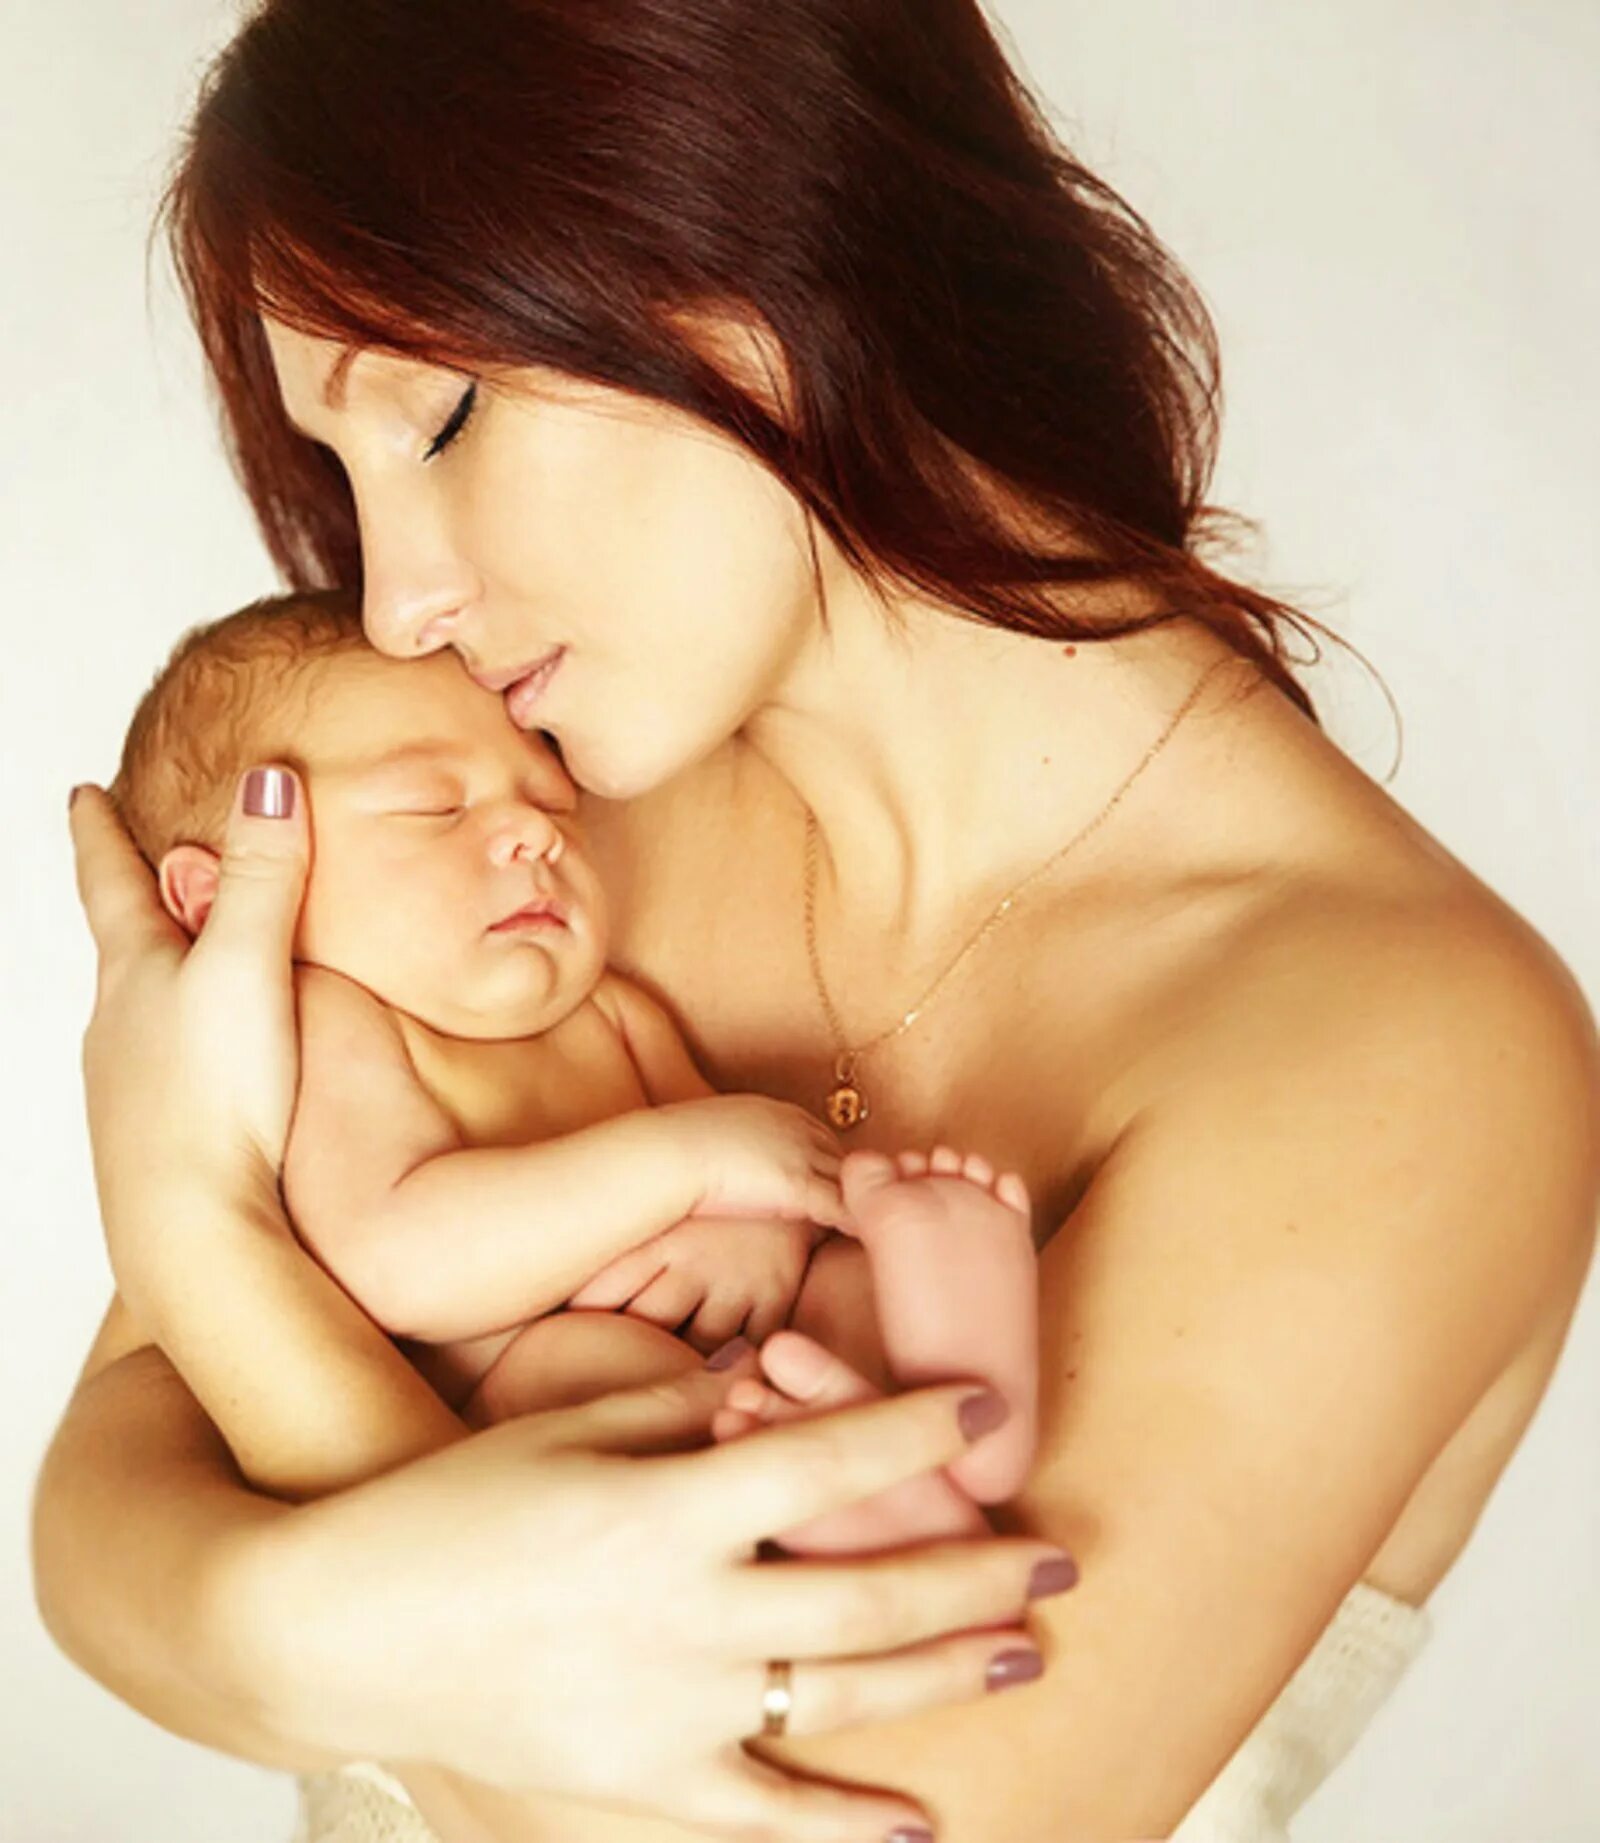 Мама с младенцем. Любовь мамы к ребенку. Женщина с младенцем на руках. Любовь матери к младенцу. Пример любви матери к ребенку